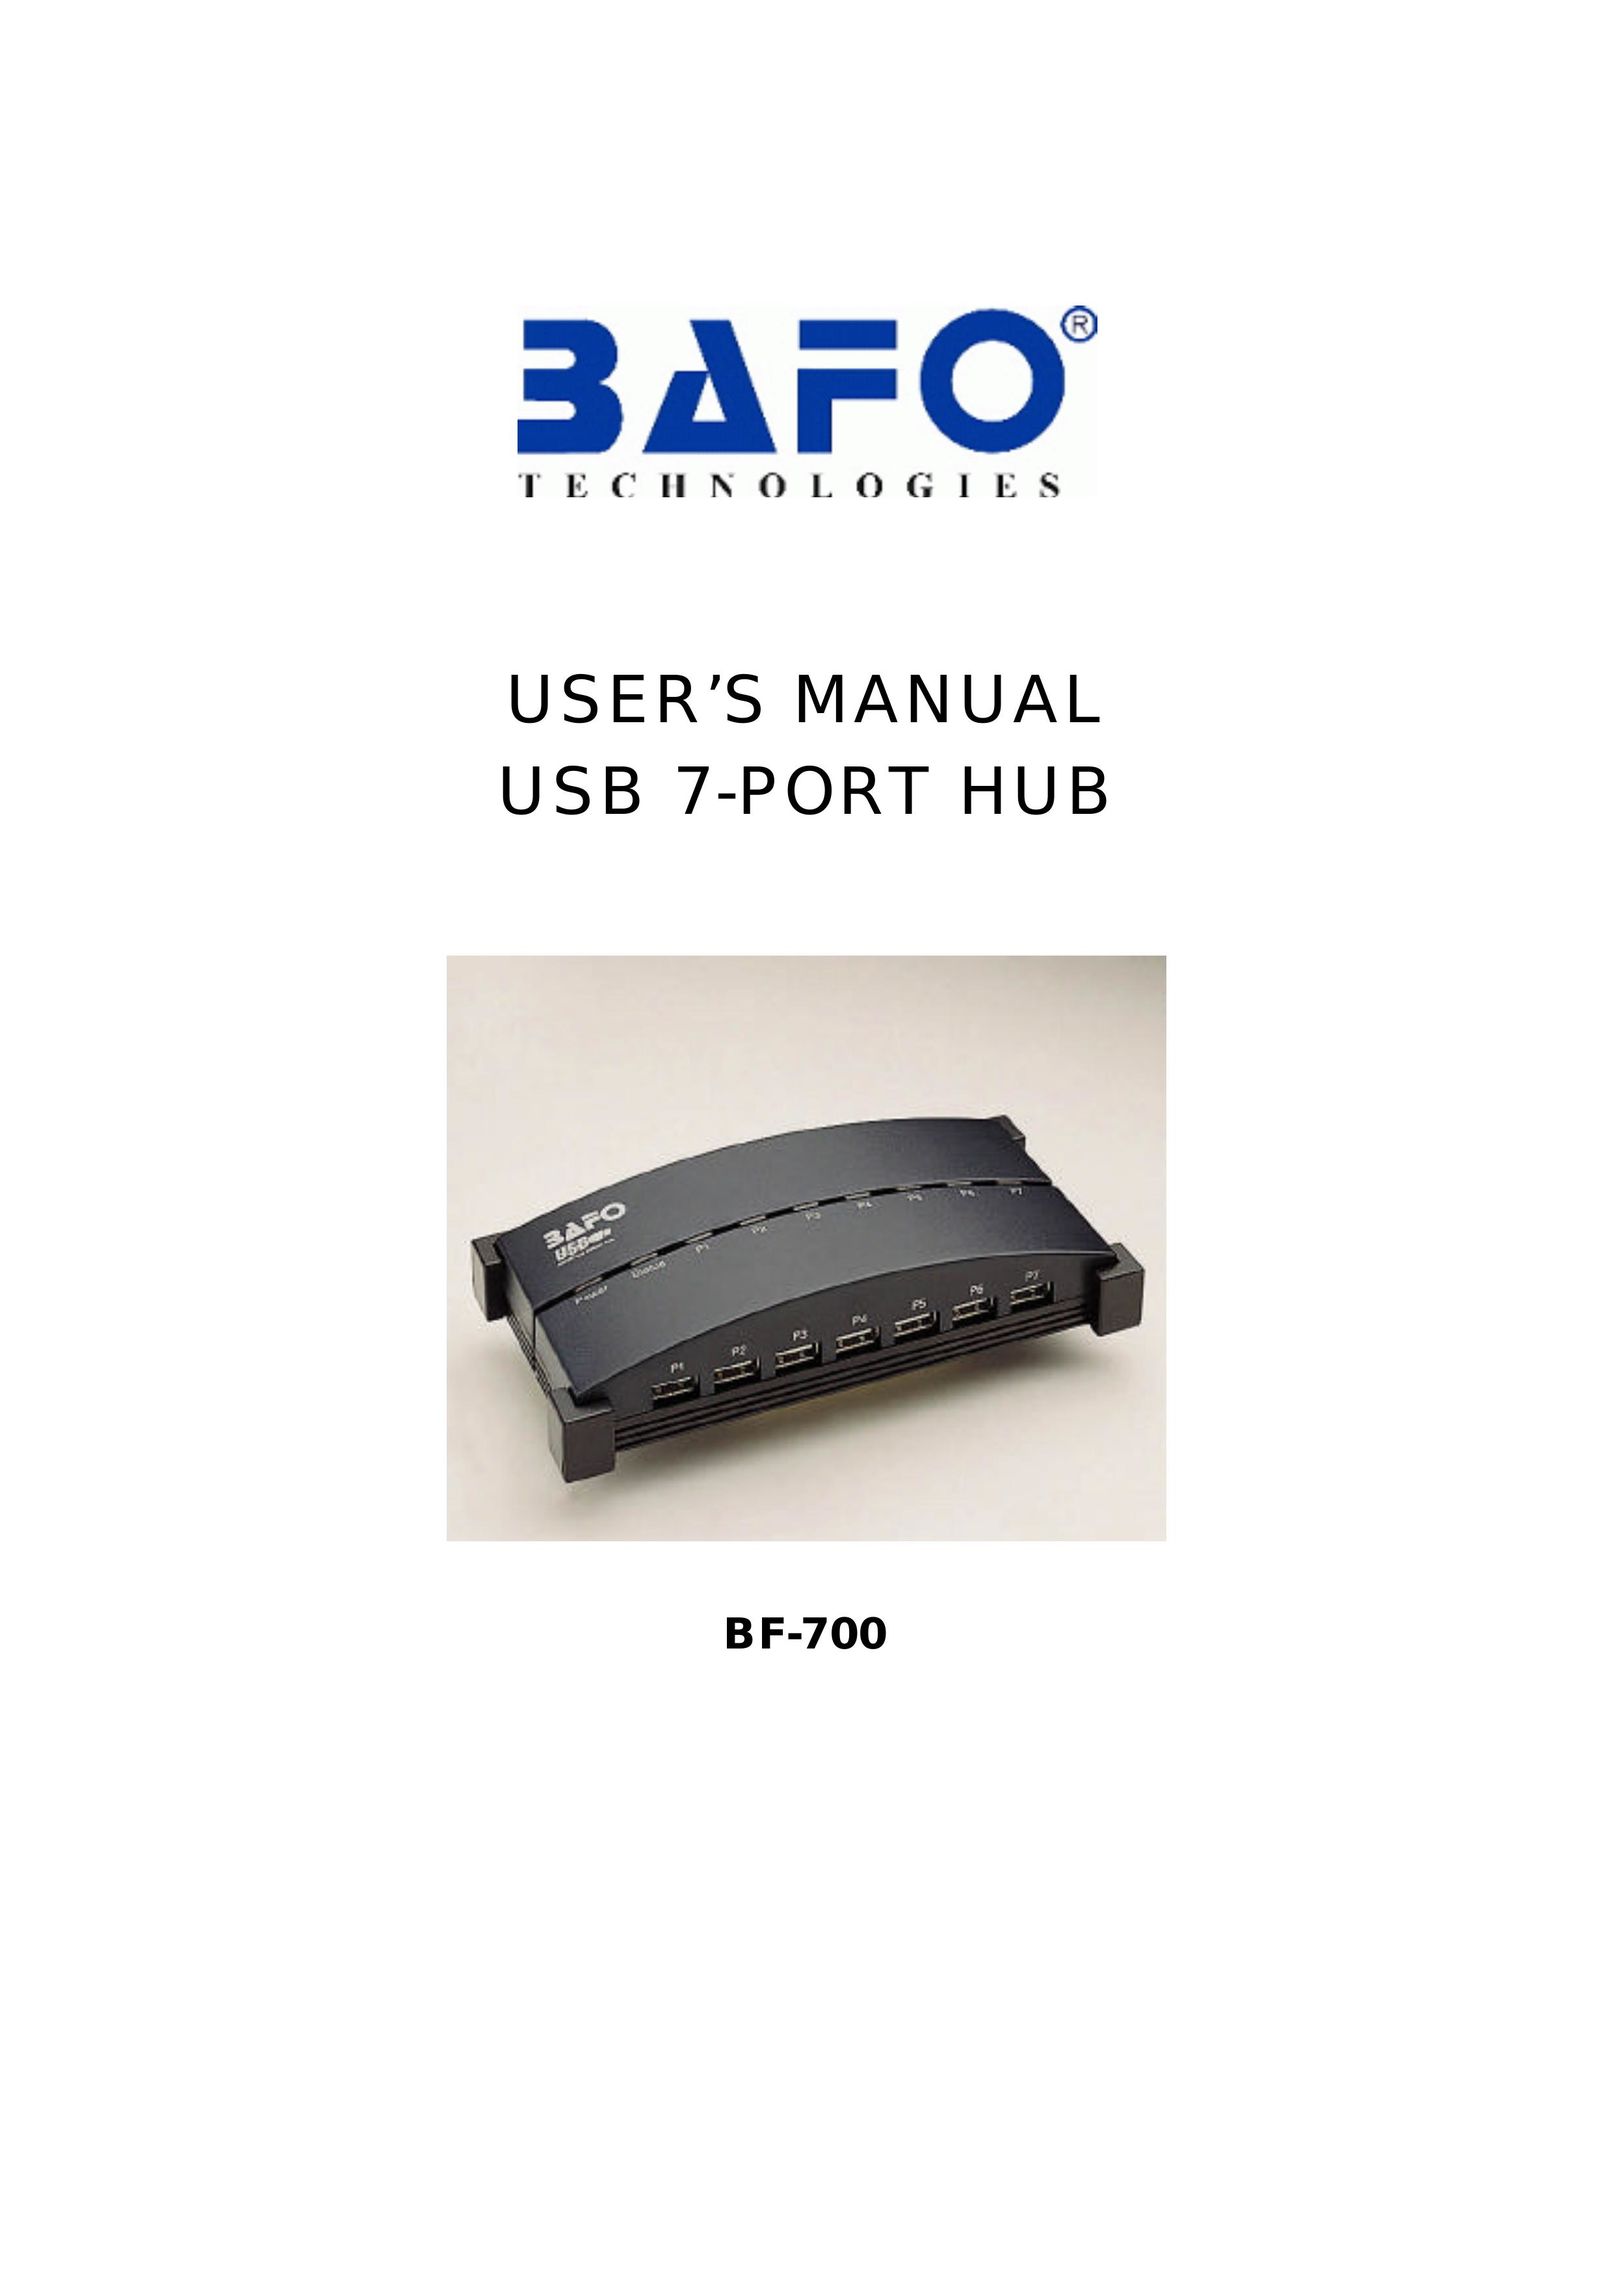 Bafo Technologies BF-700 Switch User Manual